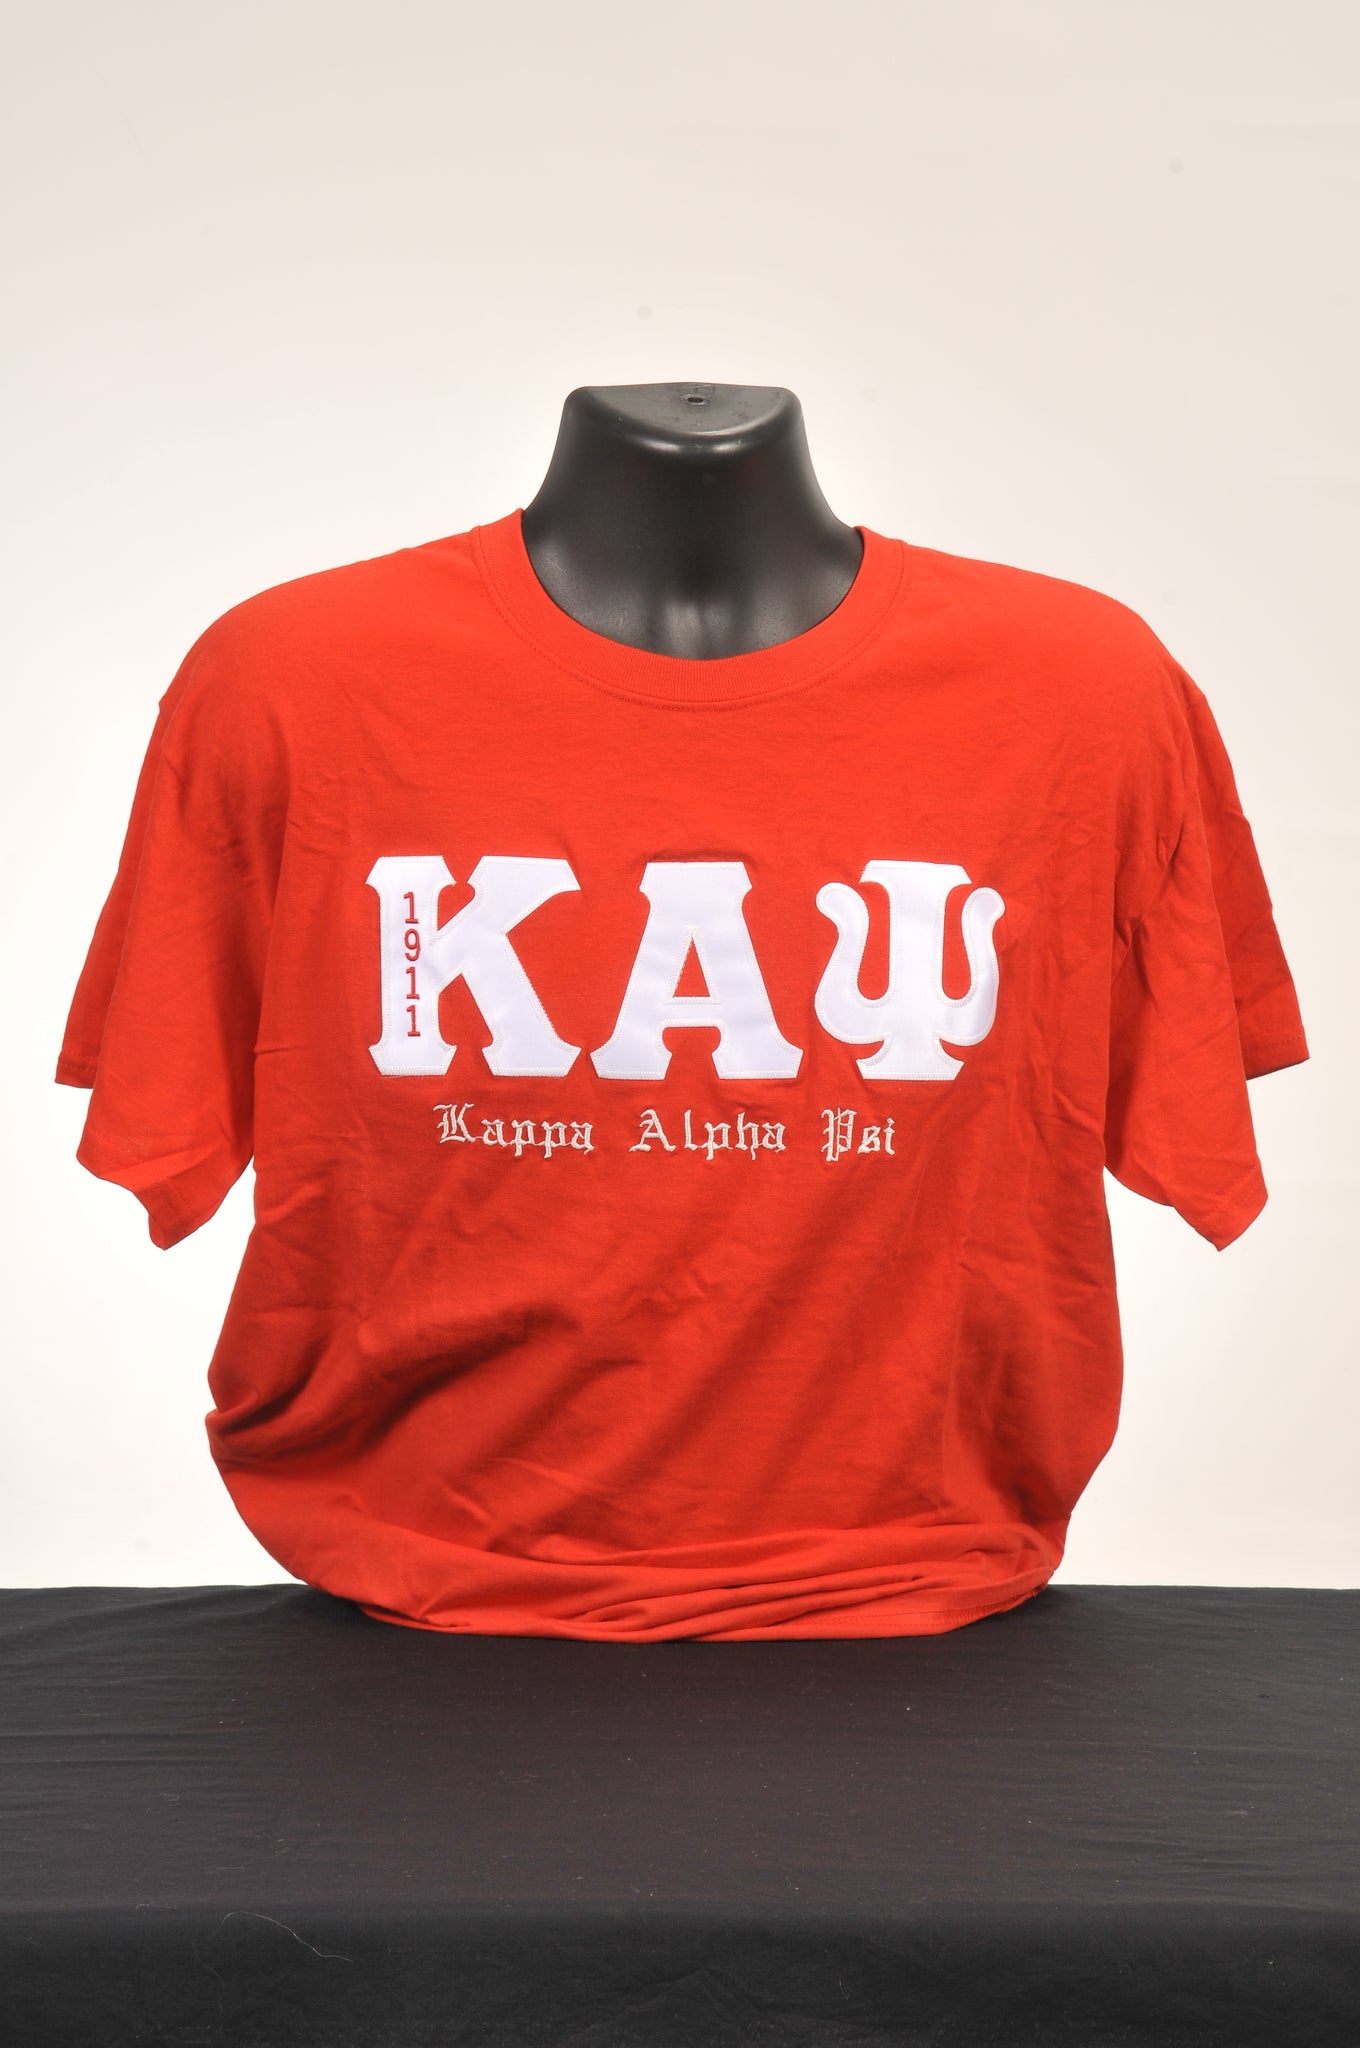 – Bling Applique Shirt Kappa Men\'s Soror Alpha Psi